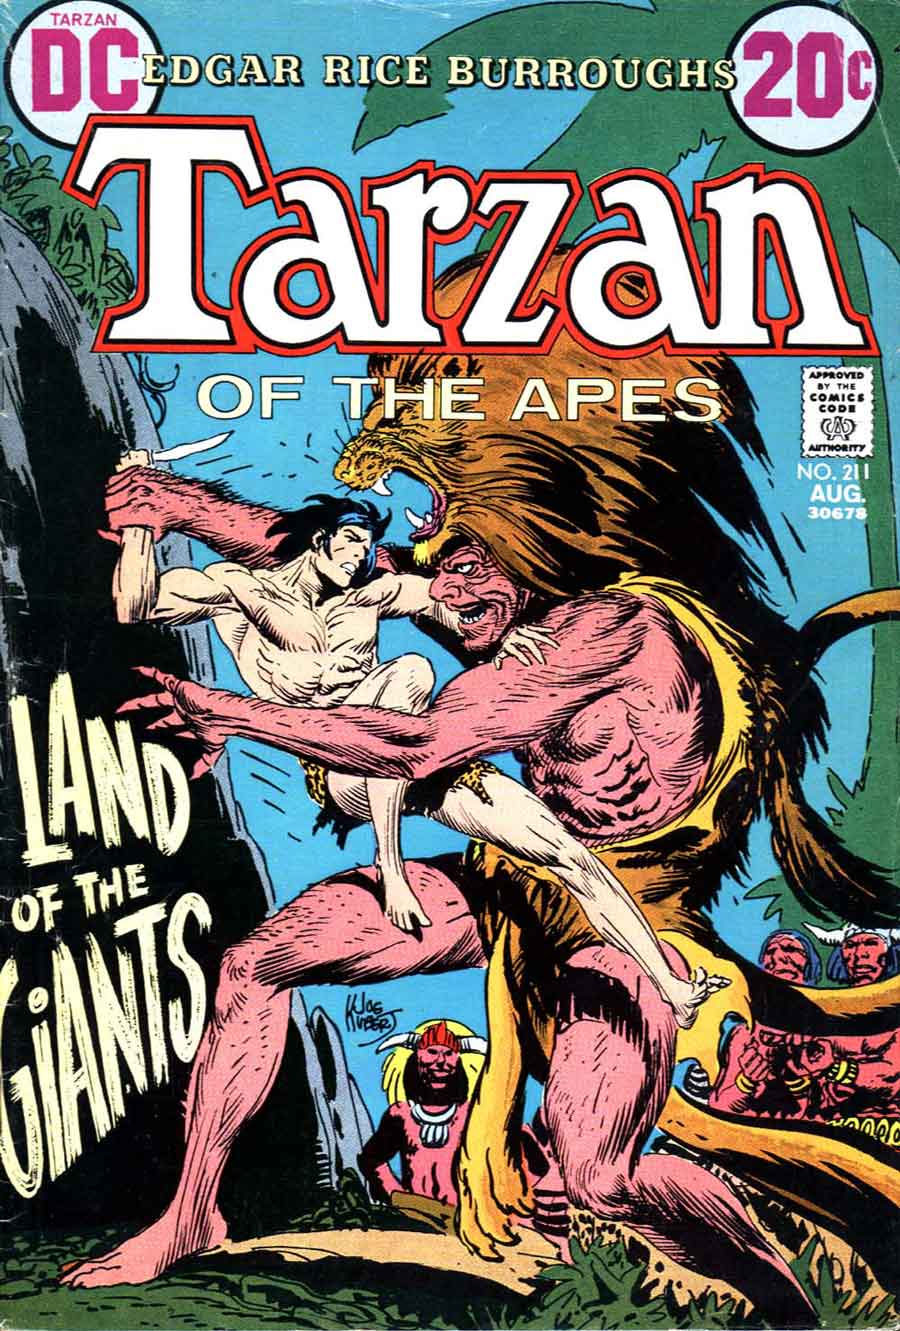 Tarzan v1 #211 dc comic book cover art by Joe Kubert